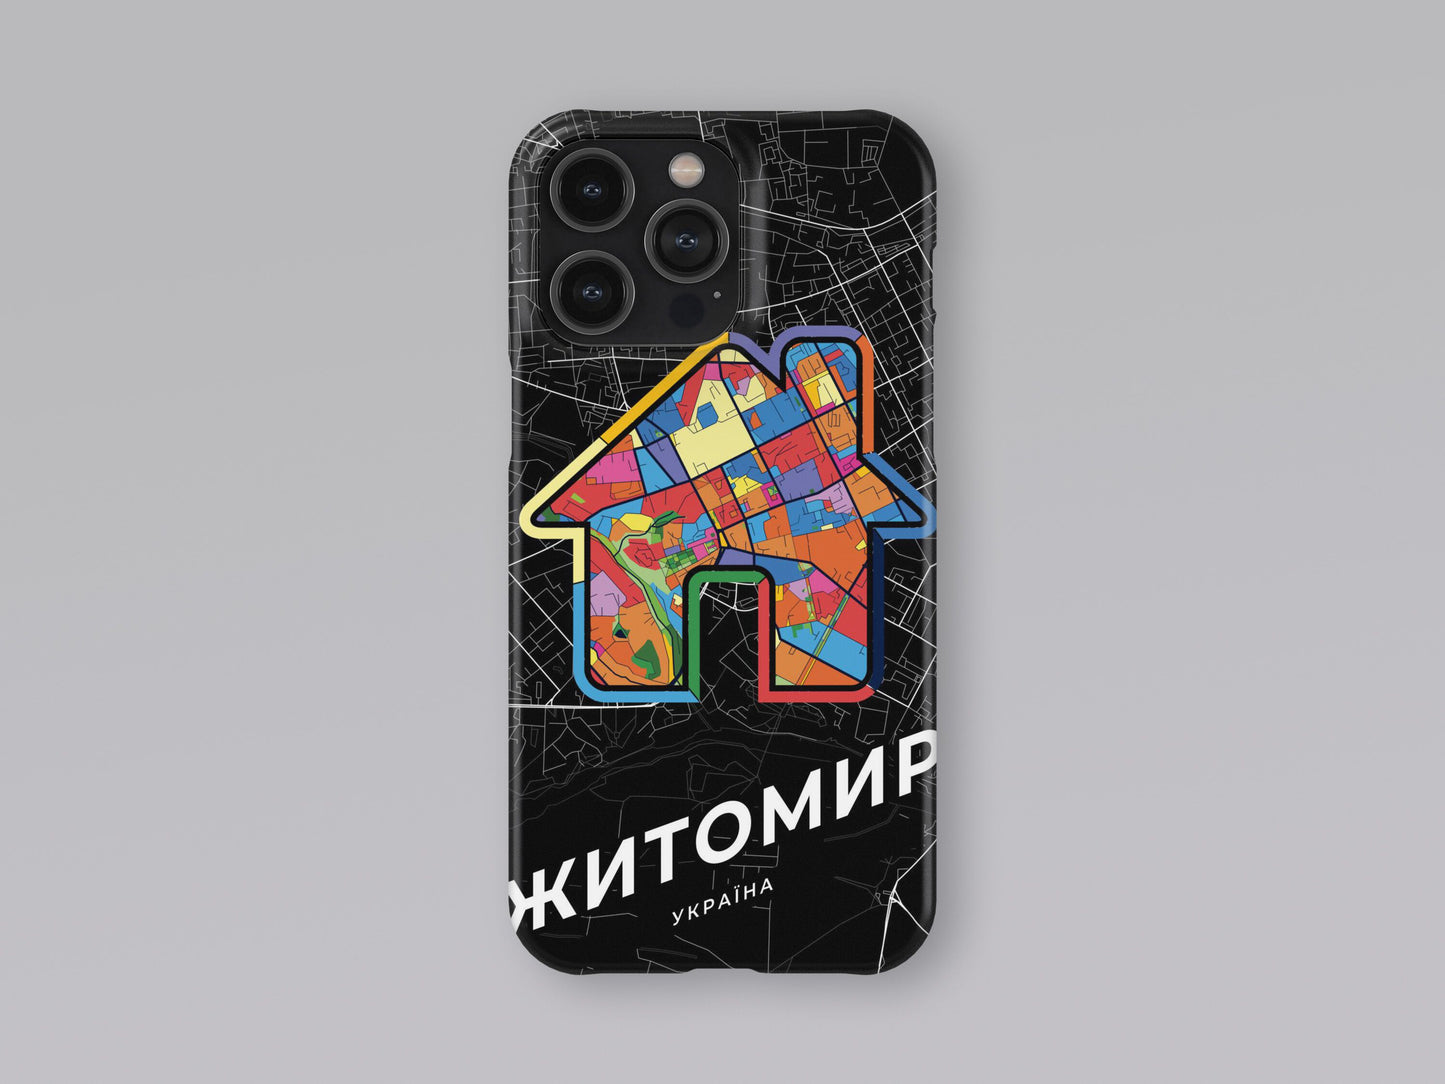 Zhytomyr Ukraine slim phone case with colorful icon 3